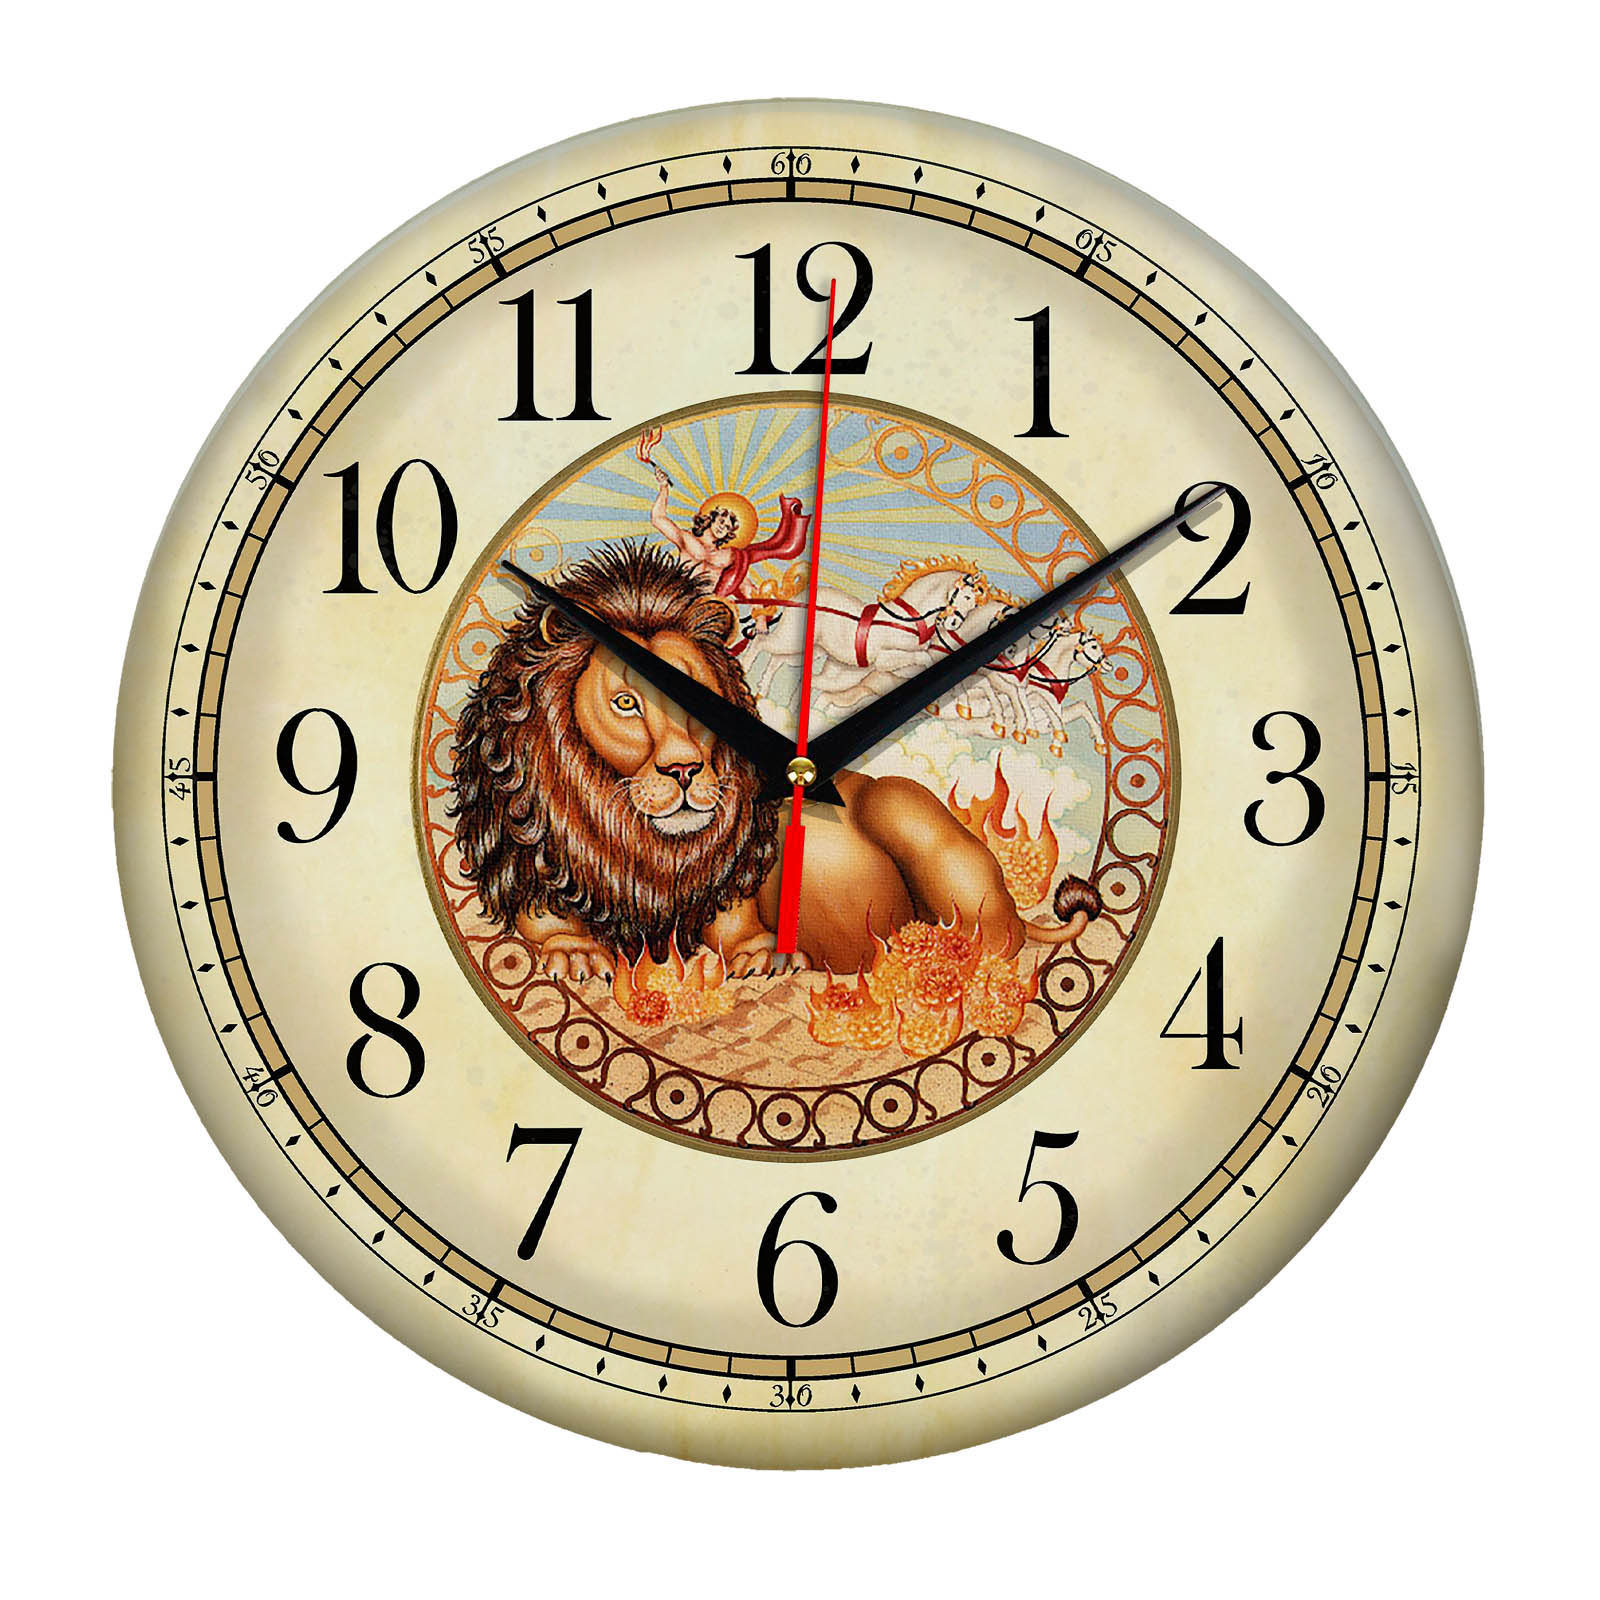 Часы Zodiac. Часы сувенир. Часы настенные сувенирные. Часы со знаками зодиака. Часы зодиак